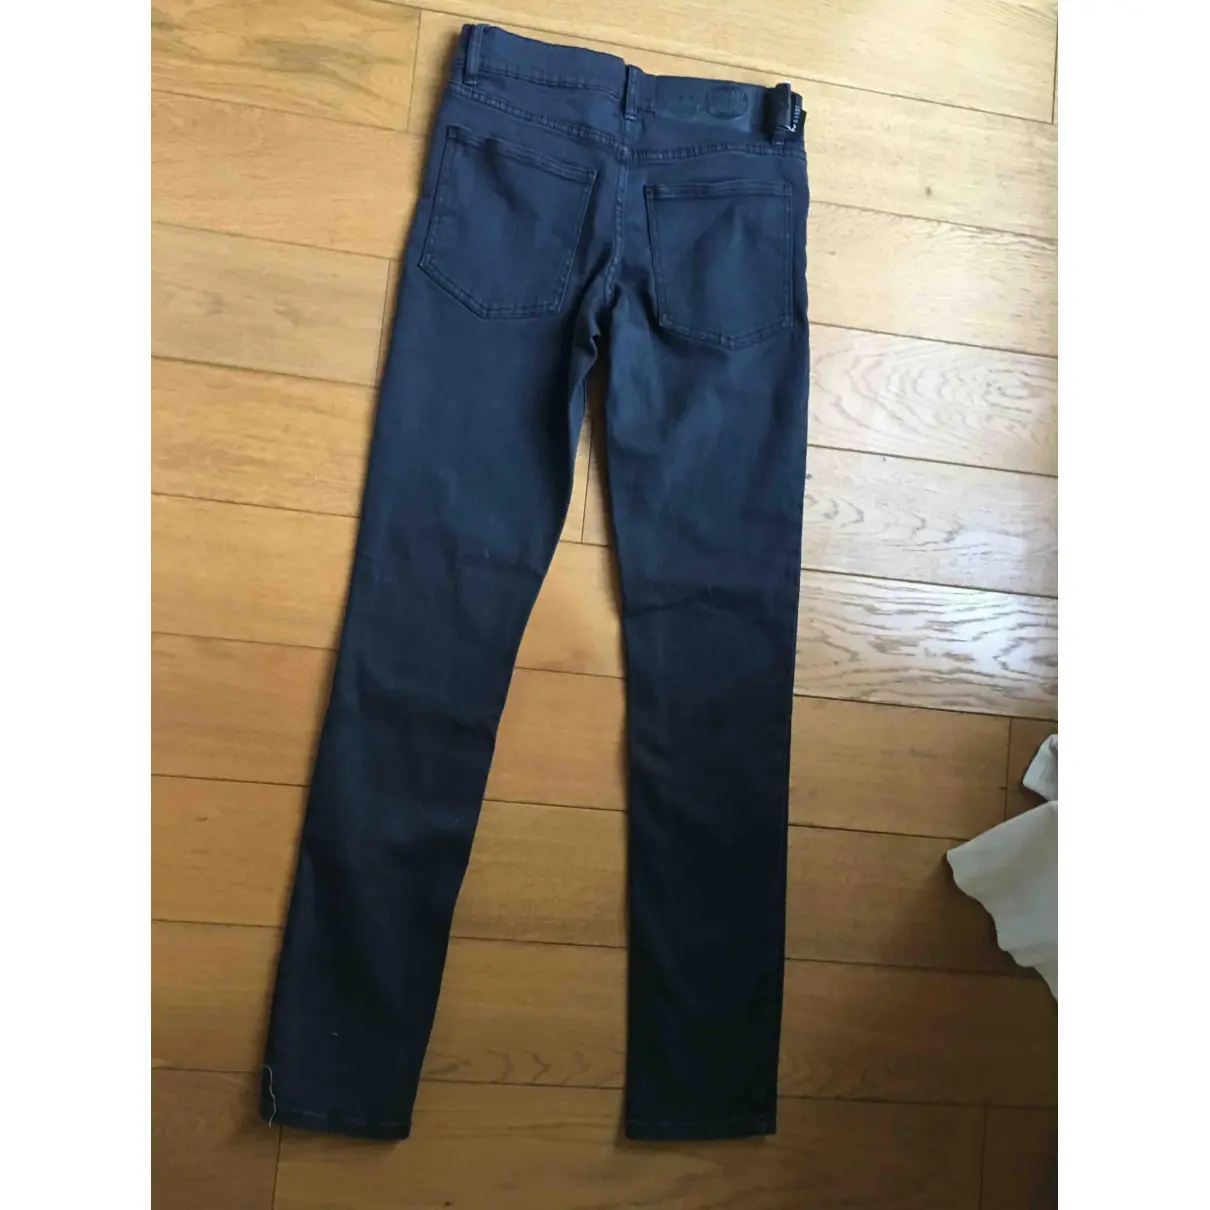 Cheap Monday Slim jeans for sale